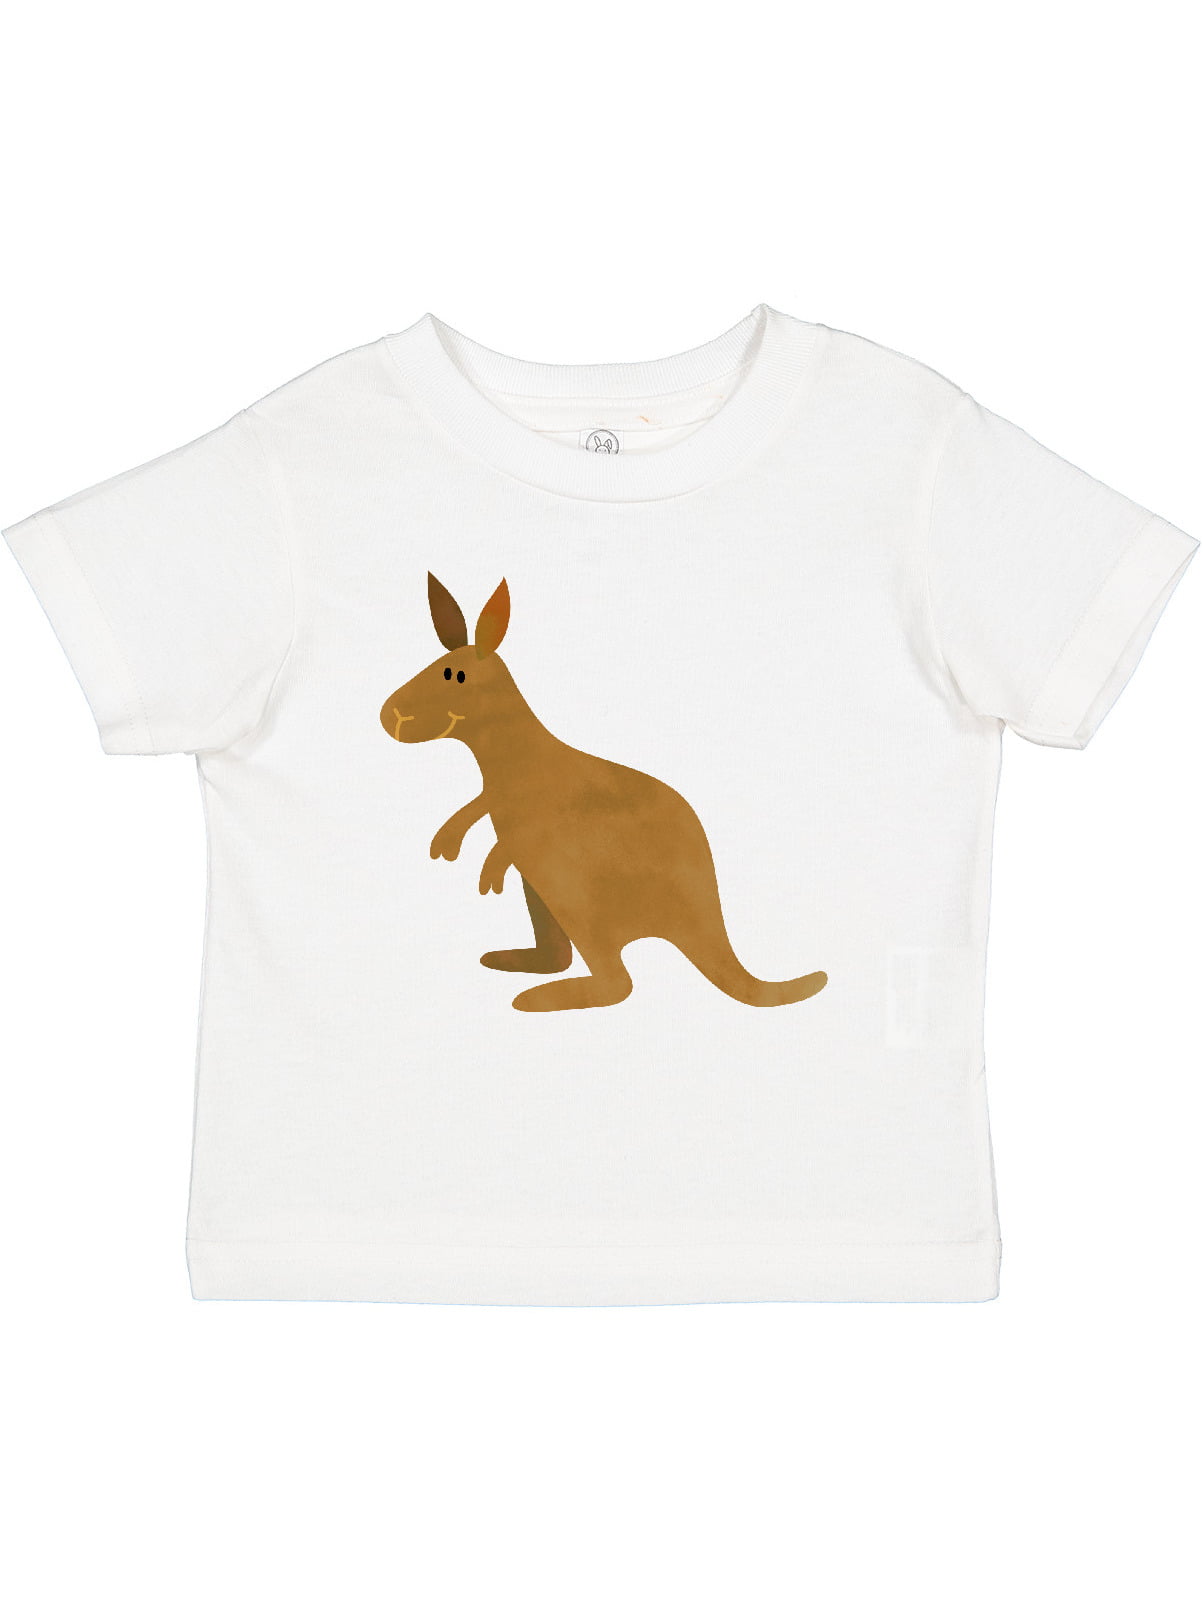 Kangaroo Kid's T-Shirt Children Boys Girls Unisex Top 